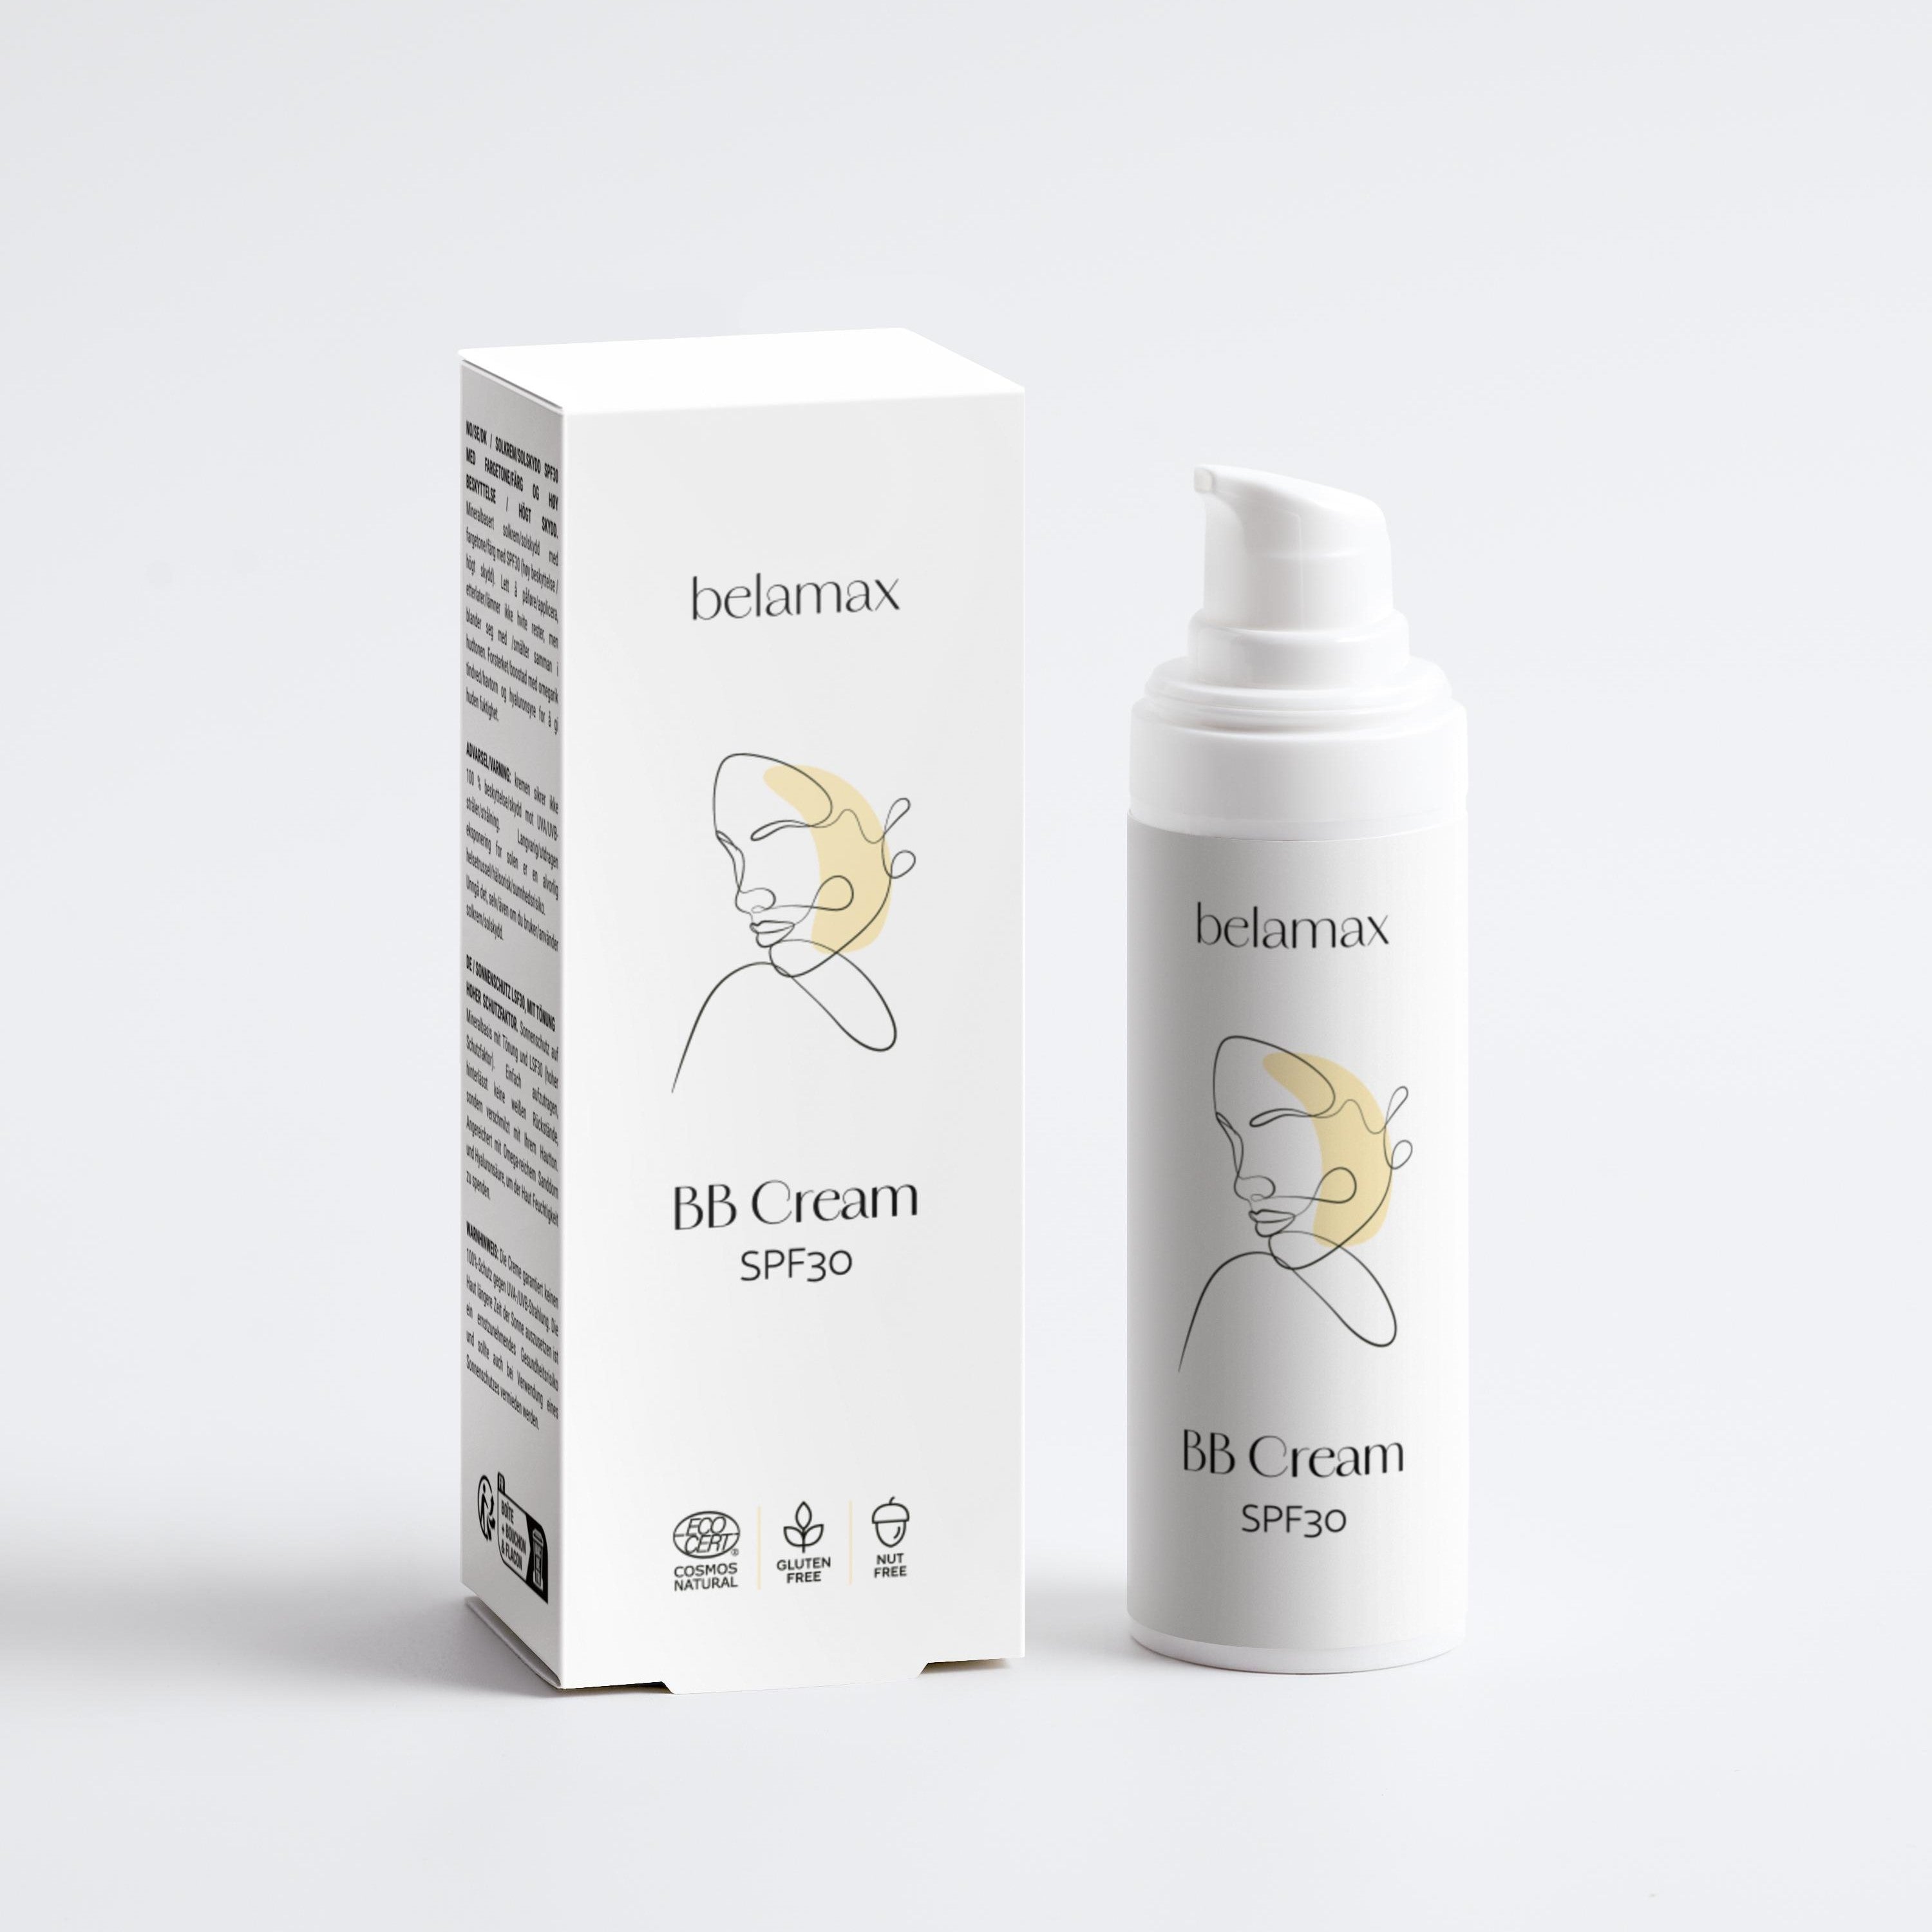 Belamax BB Cream SPF30 (30ml)